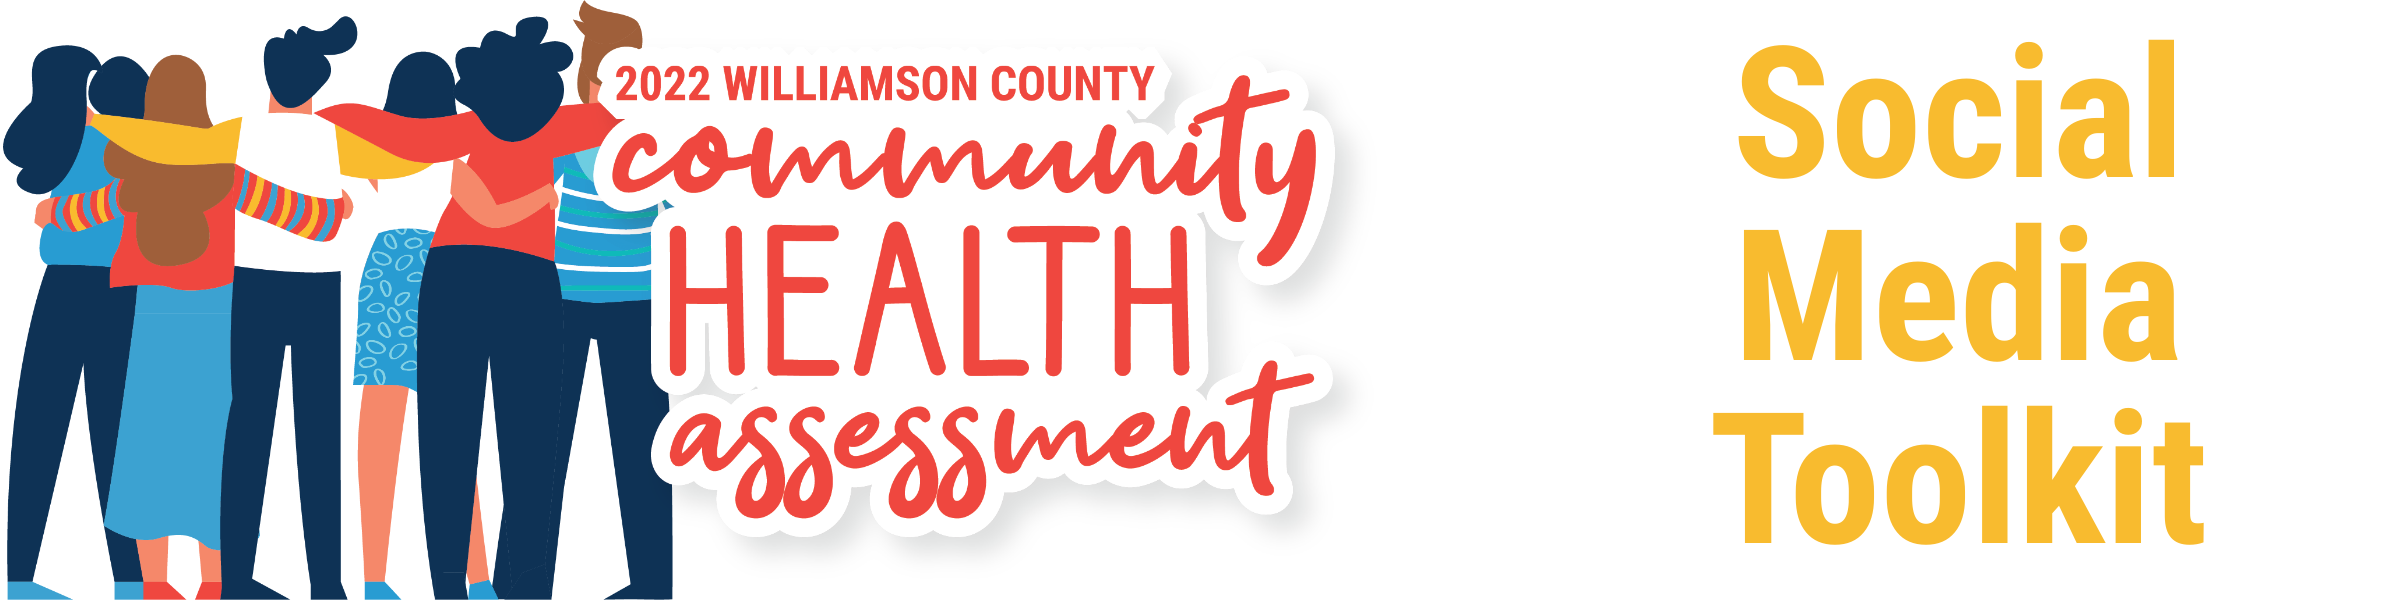 2022 Williamson County Community Health Assessment Social Media Toolkit